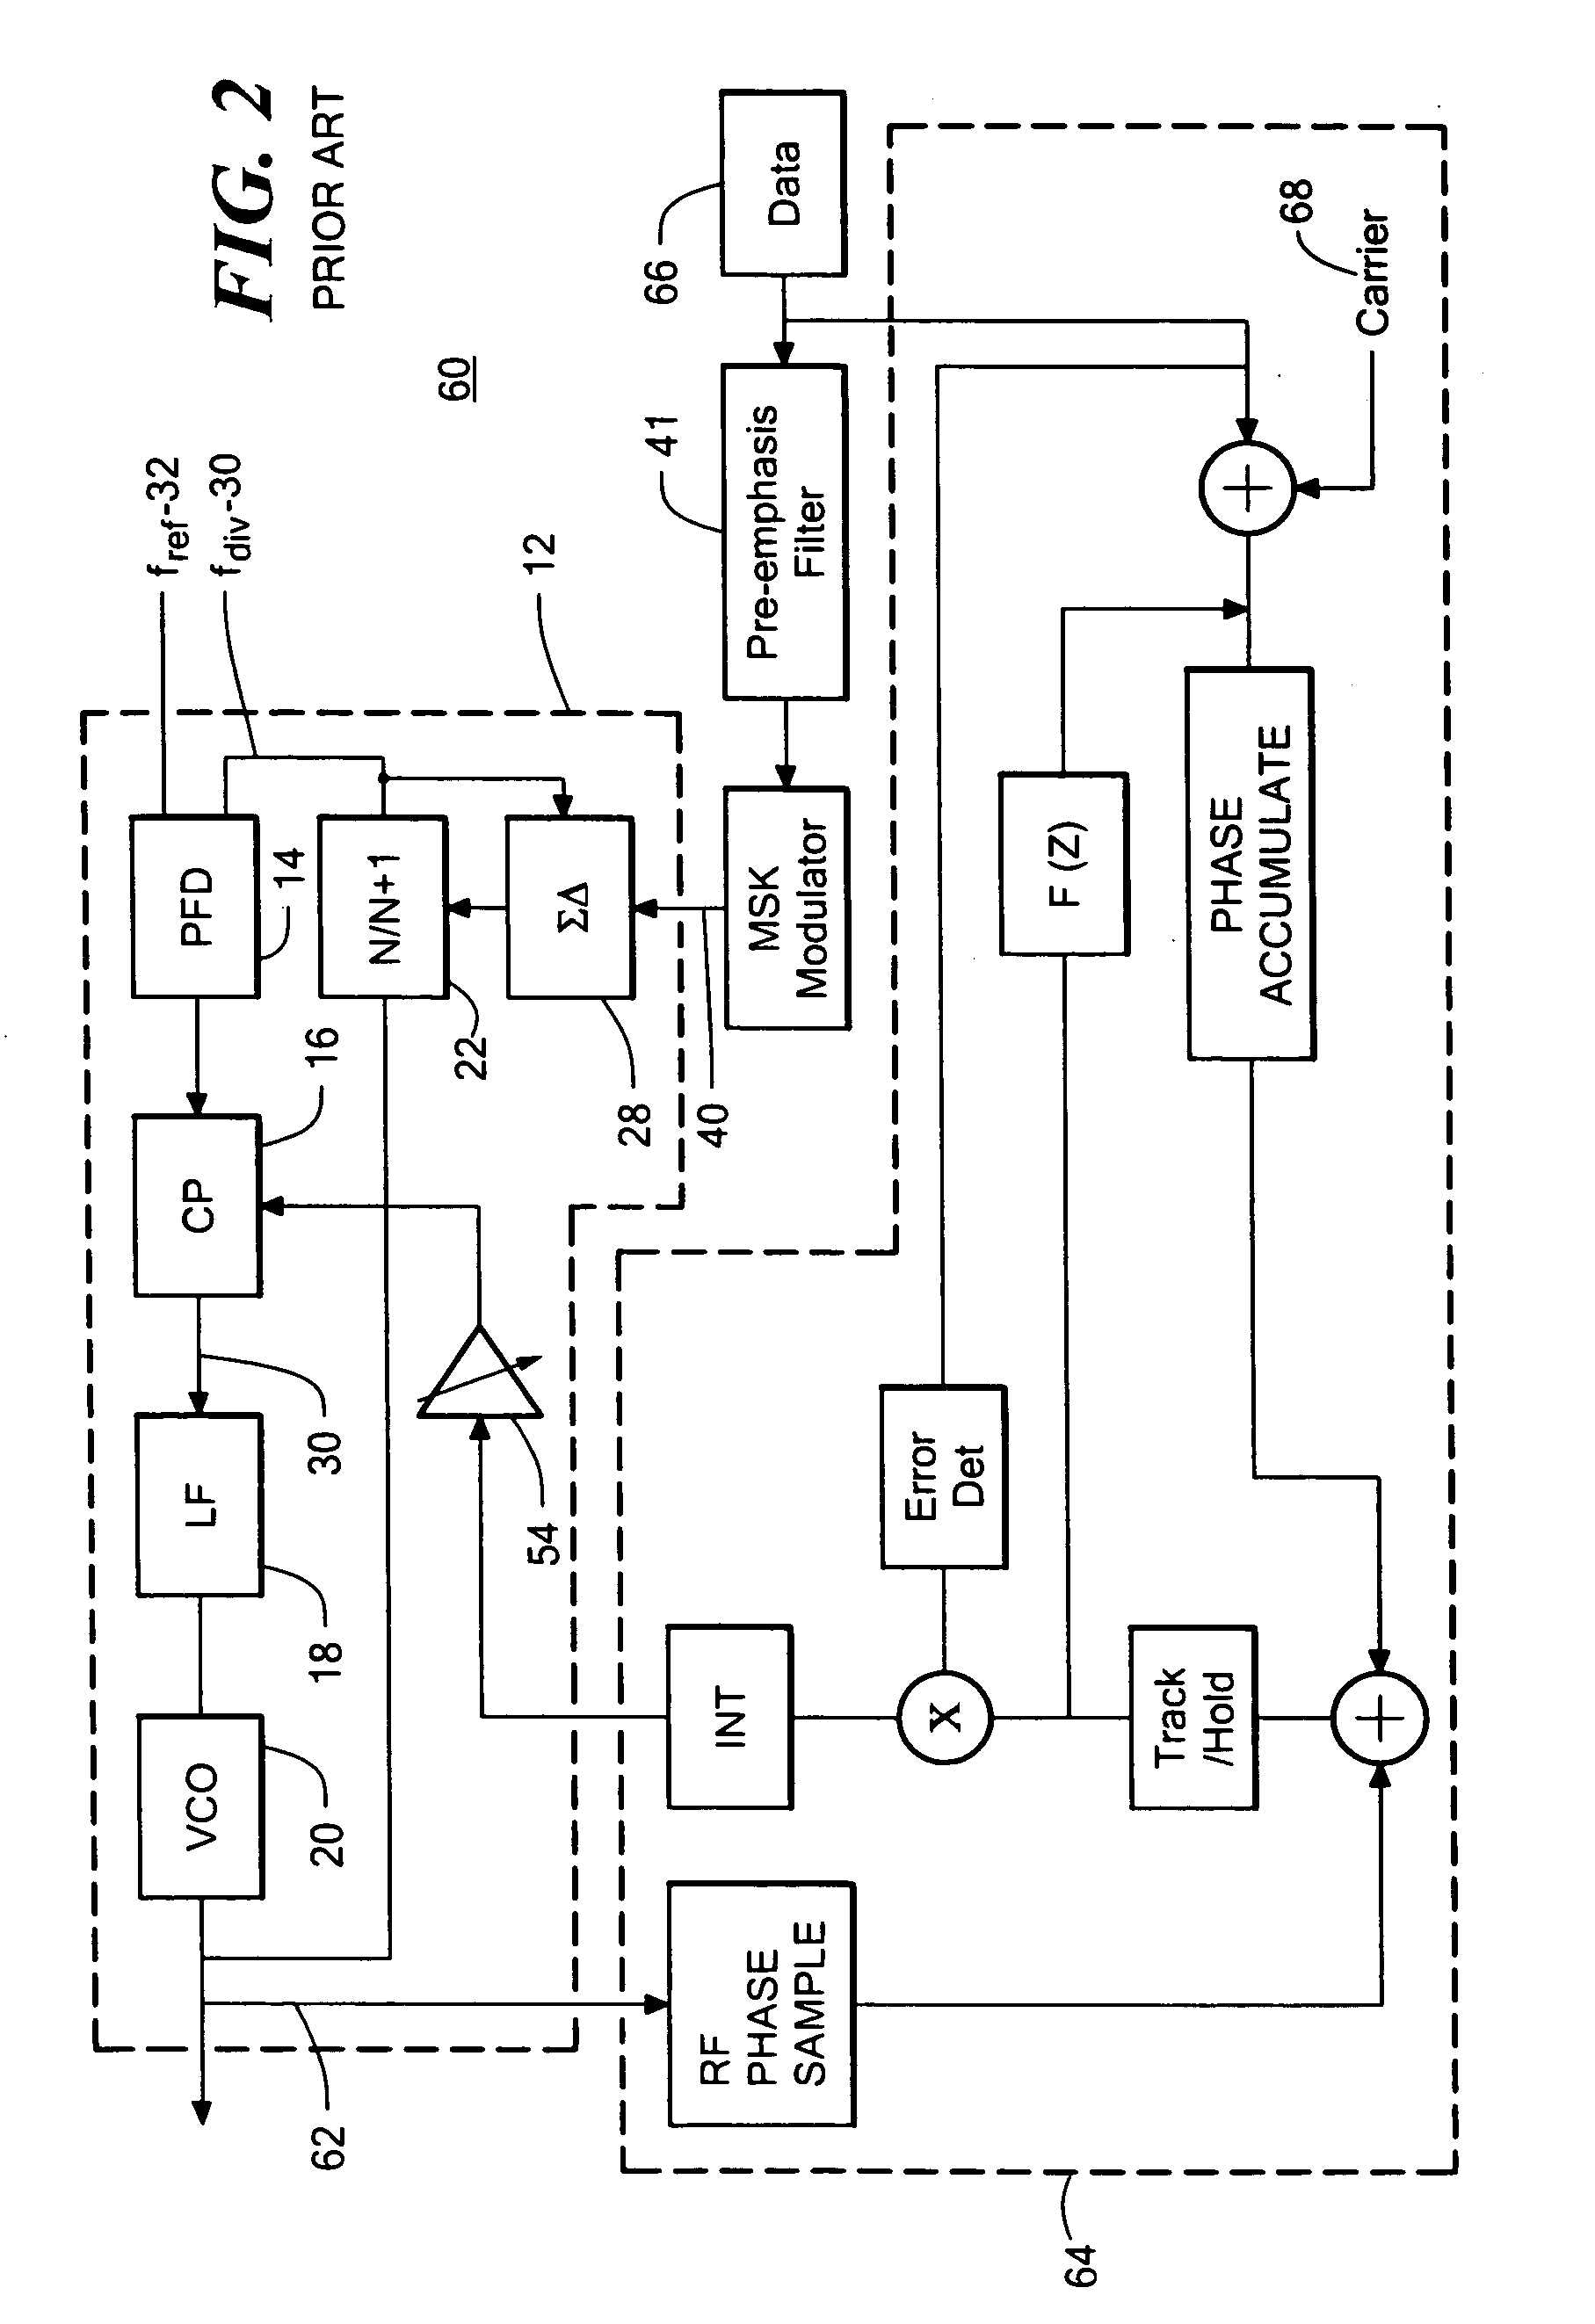 Phase lock loop RF modulator system